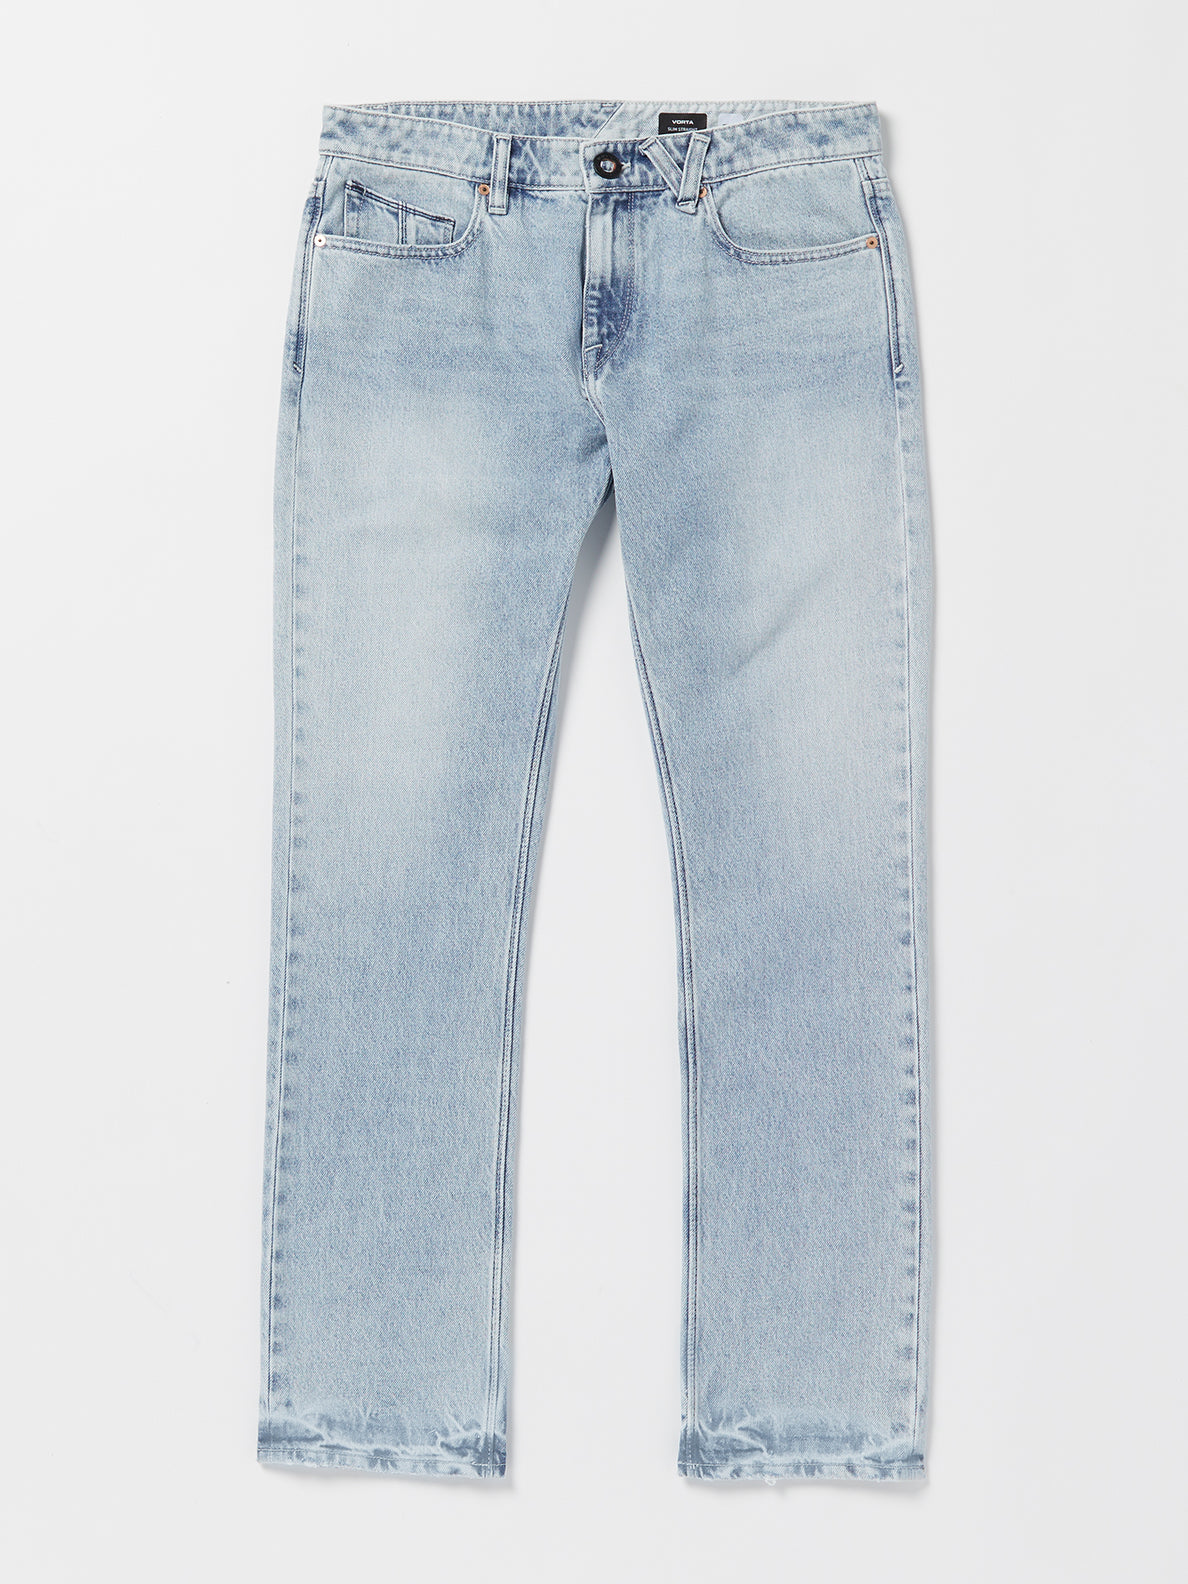 Vorta Slim Fit Jeans - Sandy Indigo (A1912302_SDI) [F]